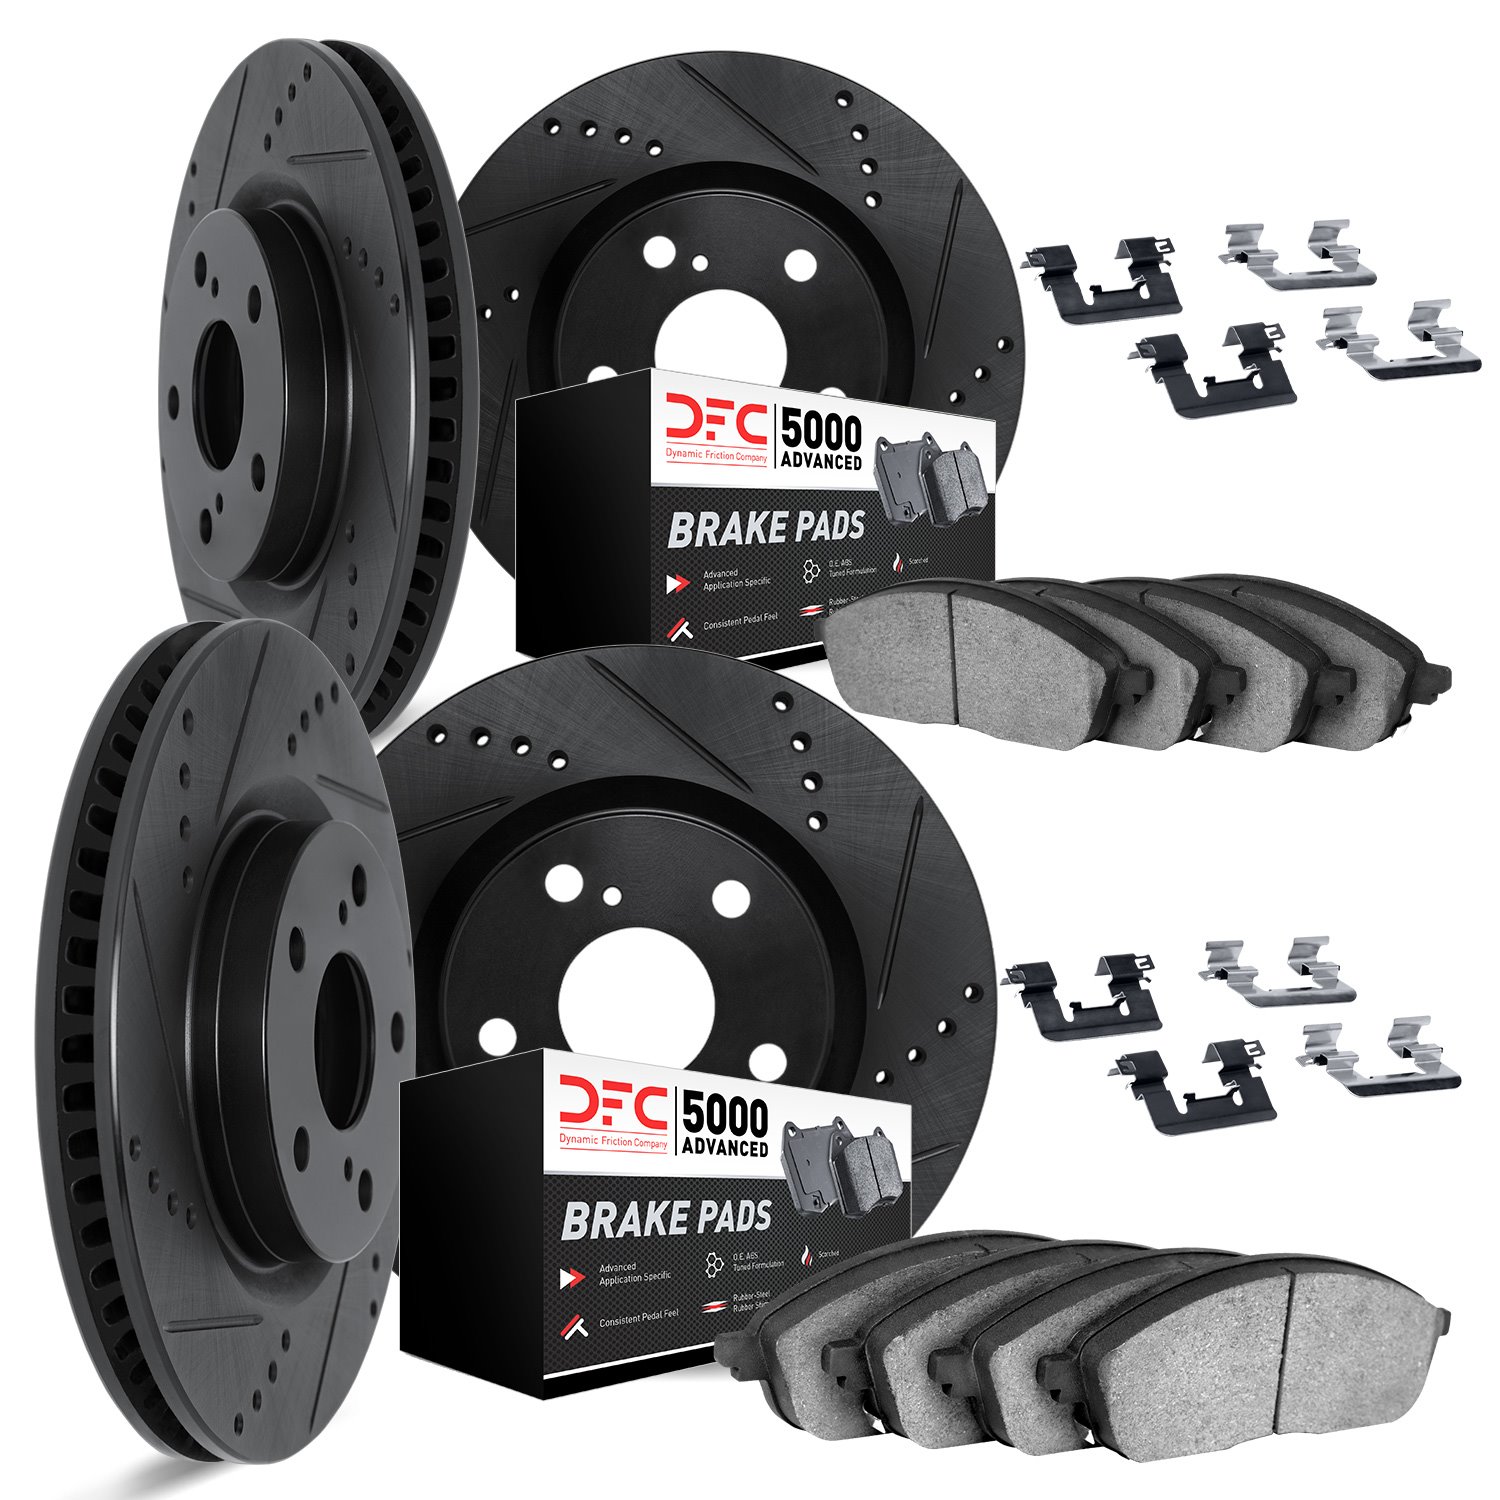 8514-75007 Drilled/Slotted Brake Rotors w/5000 Advanced Brake Pads Kit & Hardware [Black], Fits Select Lexus/Toyota/Scion, Posit